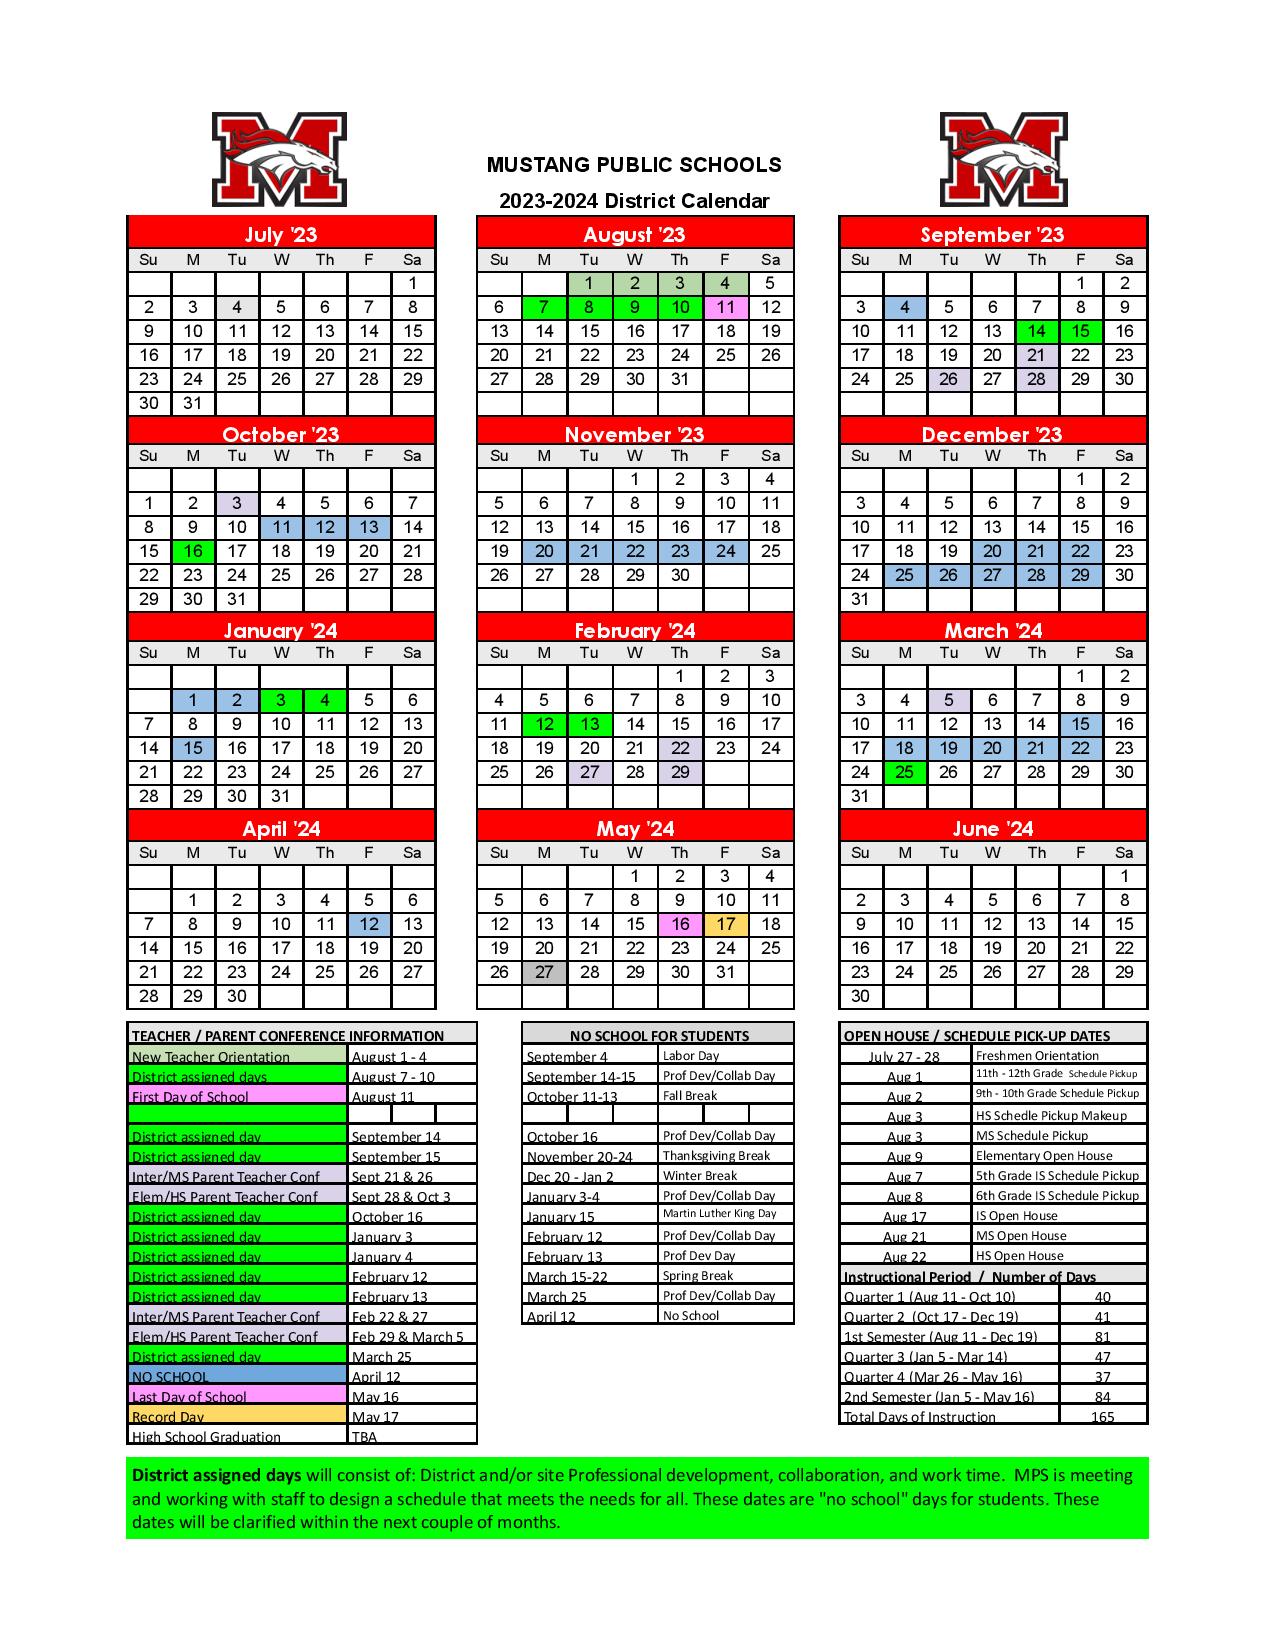 Mustang Public Schools Calendar 2024 2025 Holiday Breaks